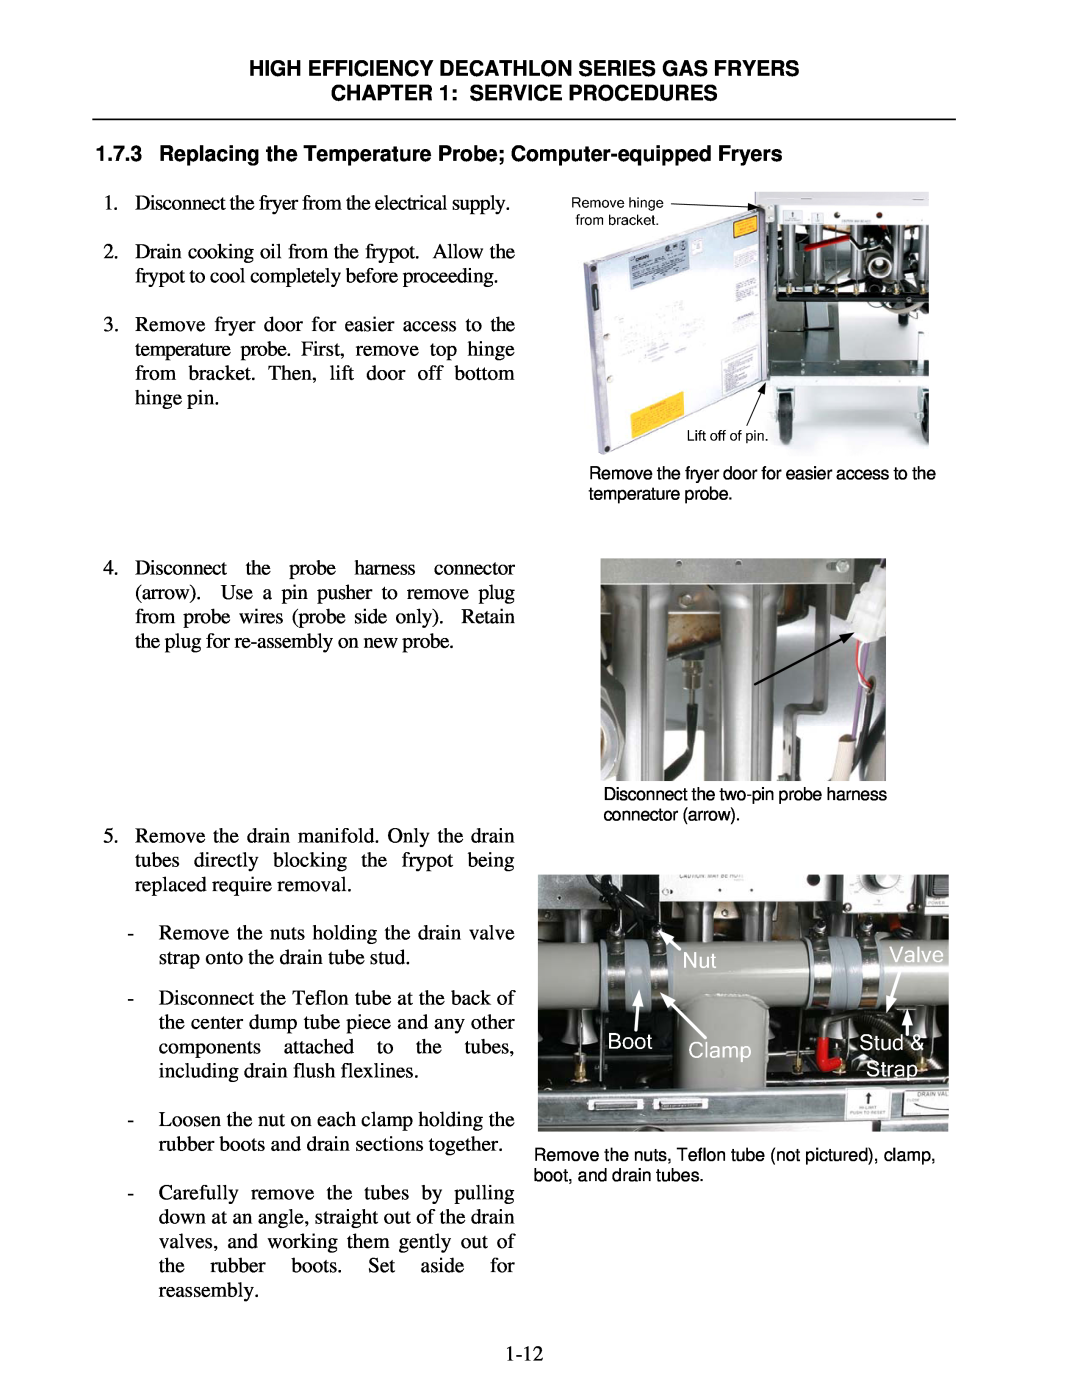 Frymaster FPHD manual High Efficiency Decathlon Series Gas Fryers, Service Procedures 